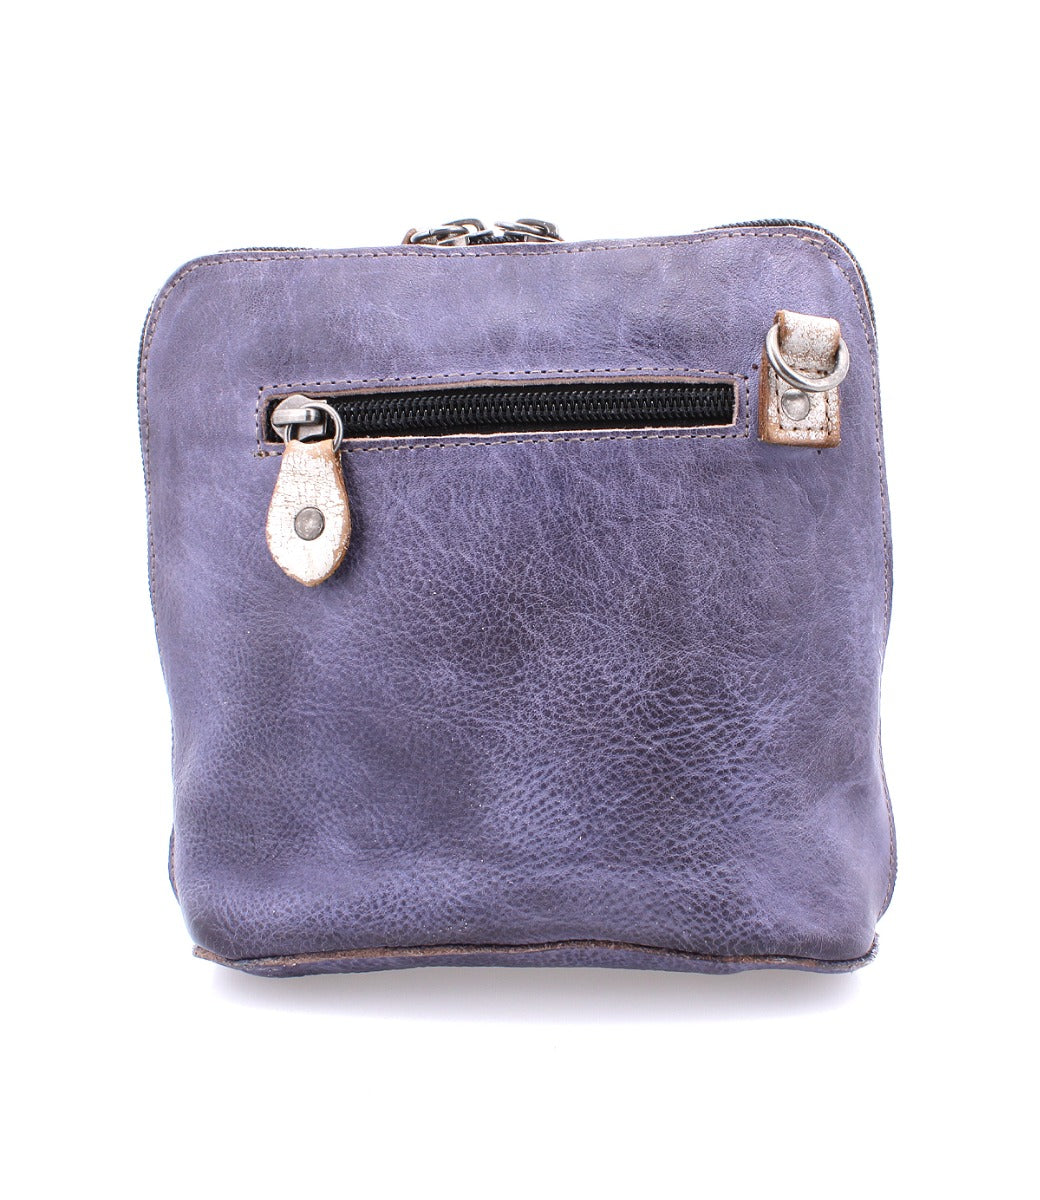 A purple leather Ventura cross body bag with a zipper by Bed Stu.